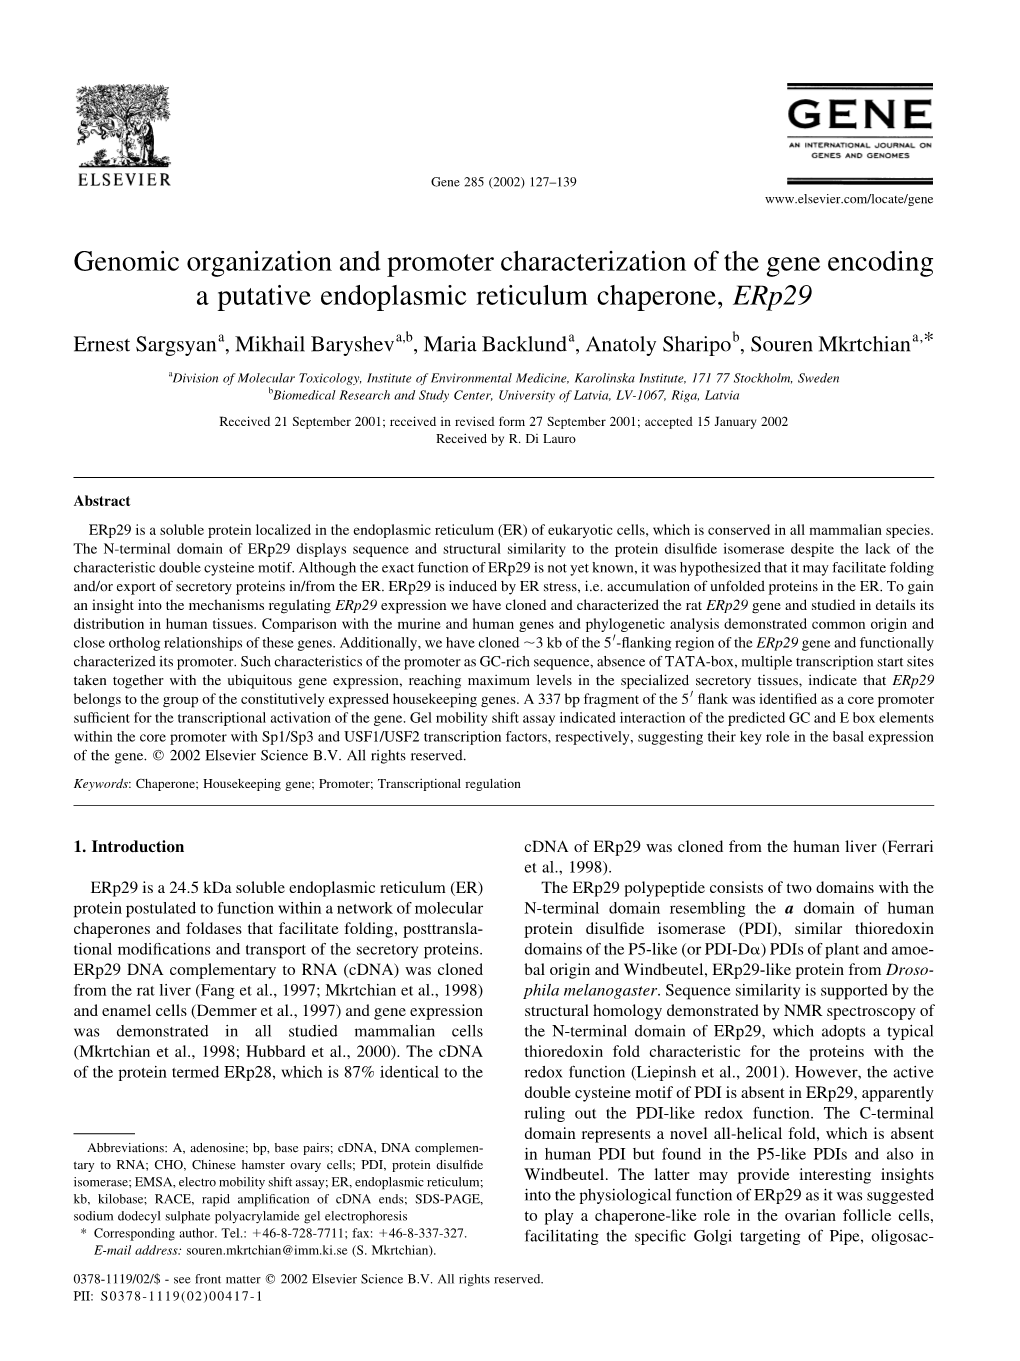 Genomic Organization and Promoter Characterization of the Gene Encoding a Putative Endoplasmic Reticulum Chaperone, Erp29